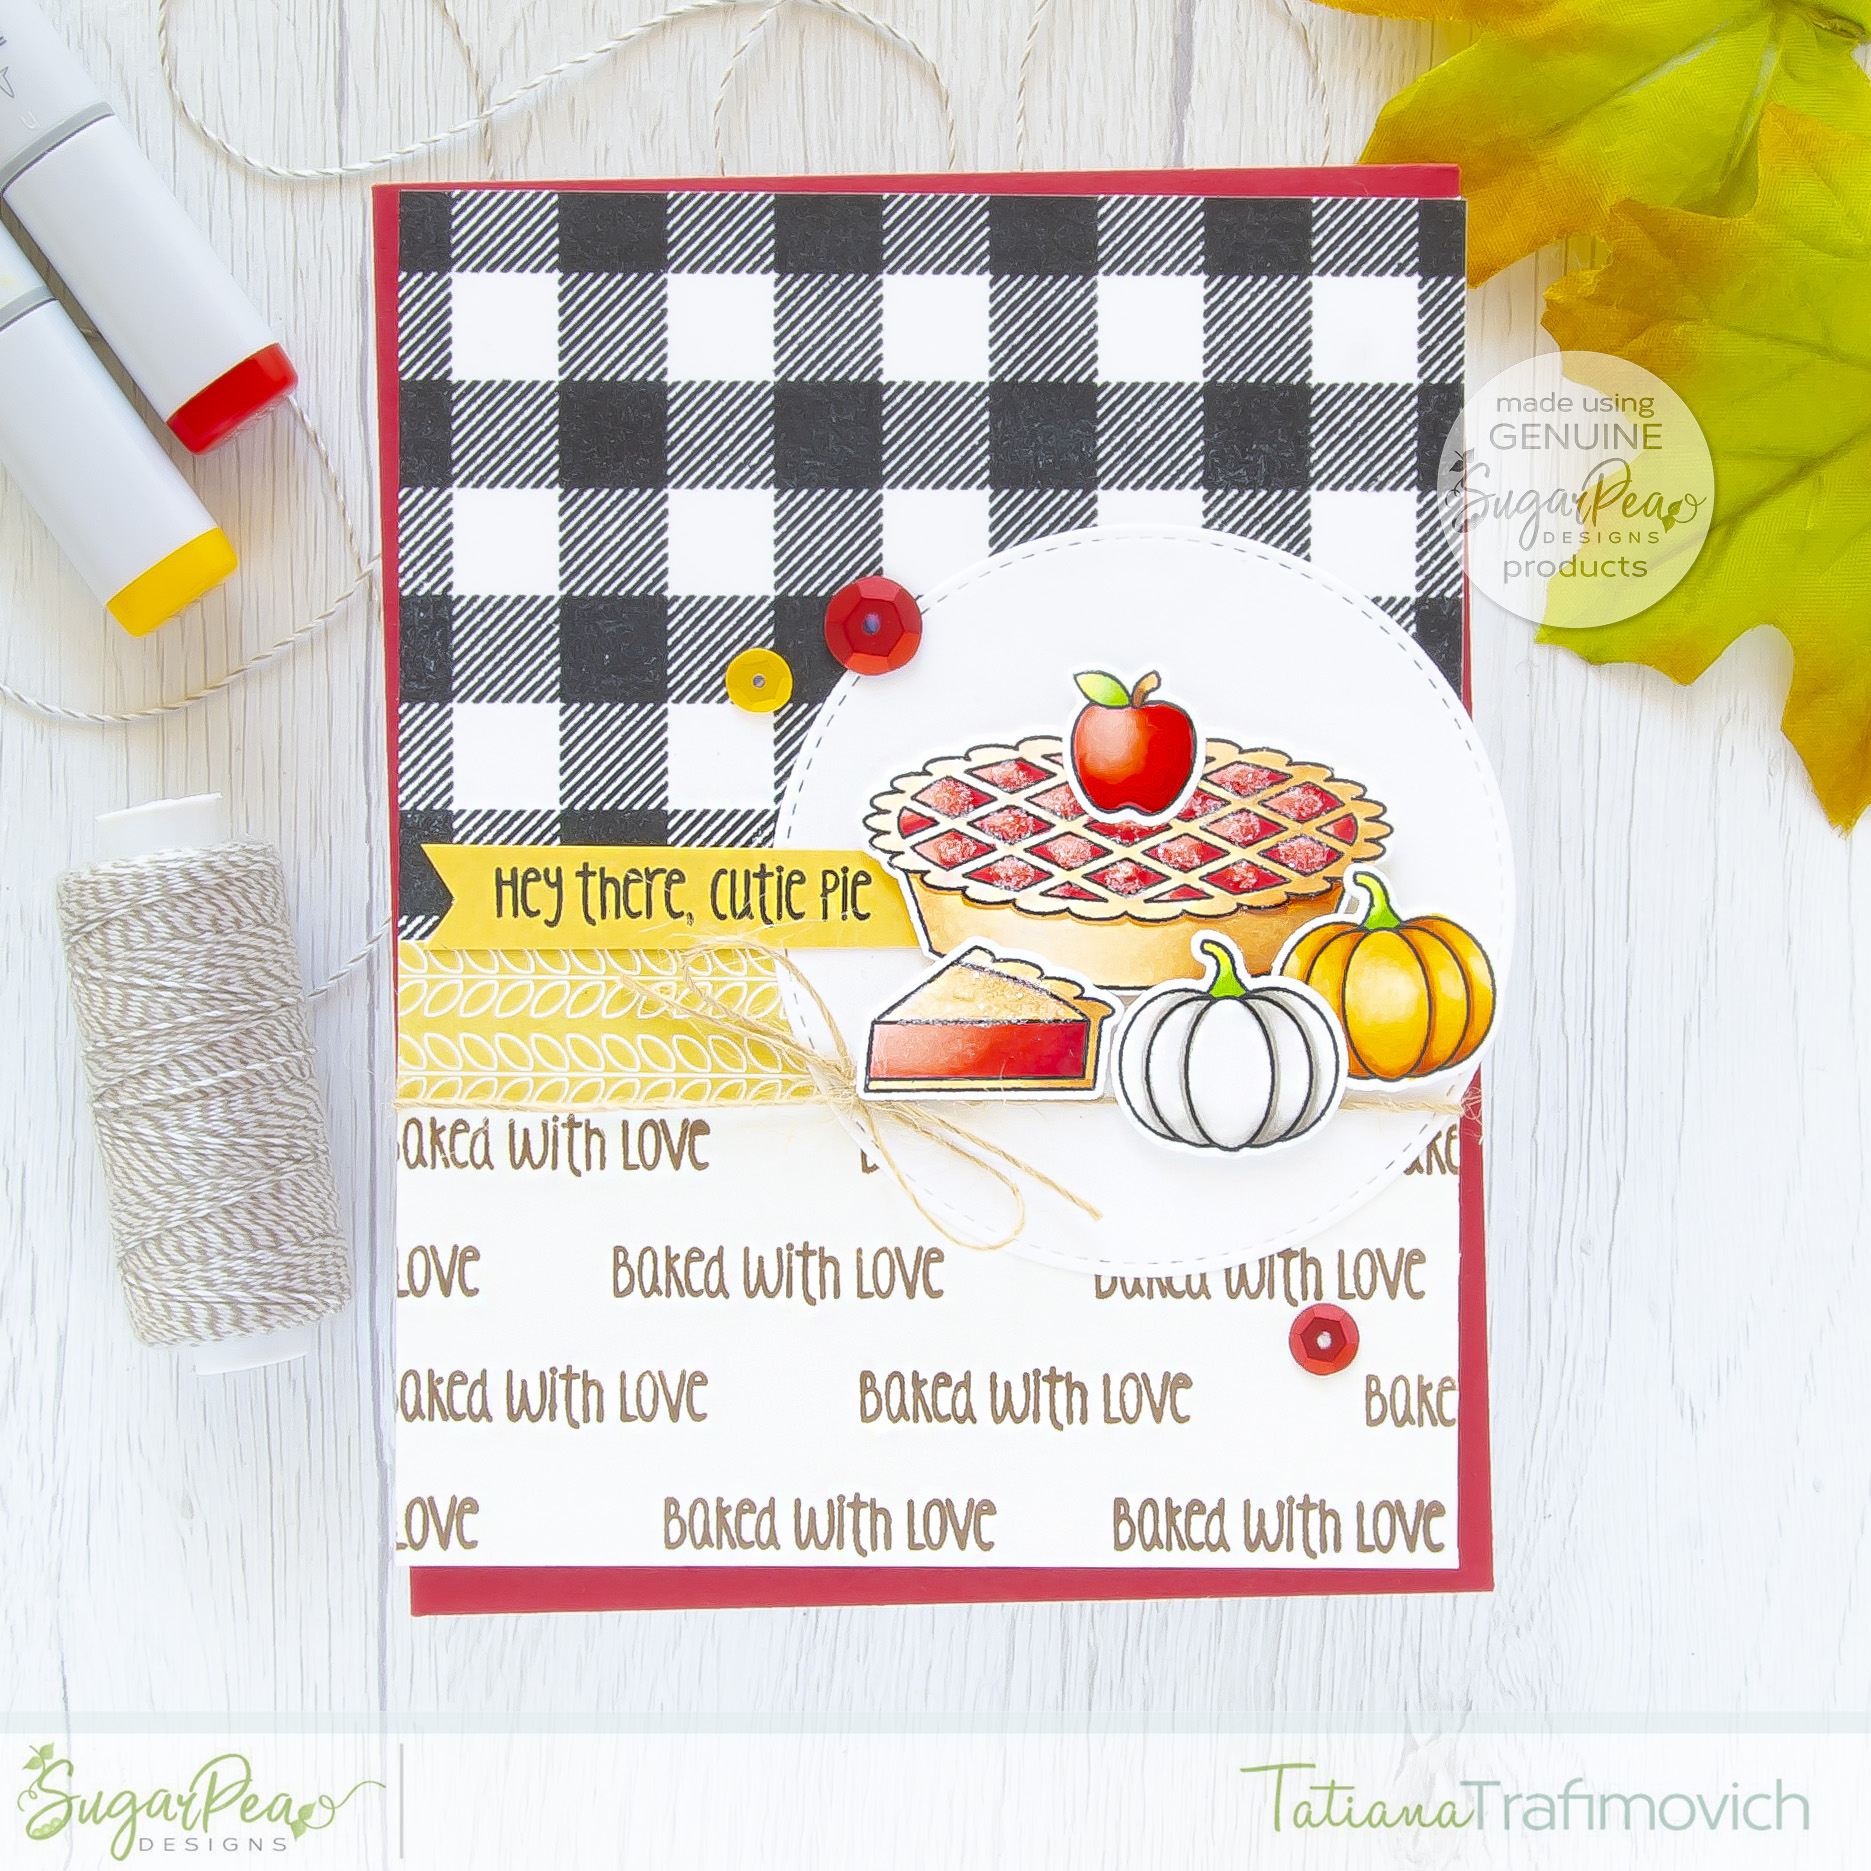 Hey There, Cutie Pie #handmade card by Tatiana Trafimovich #tatianacraftandart - Sweet As Pie stamp set by SugarPea Designs #sugarpeadesigns